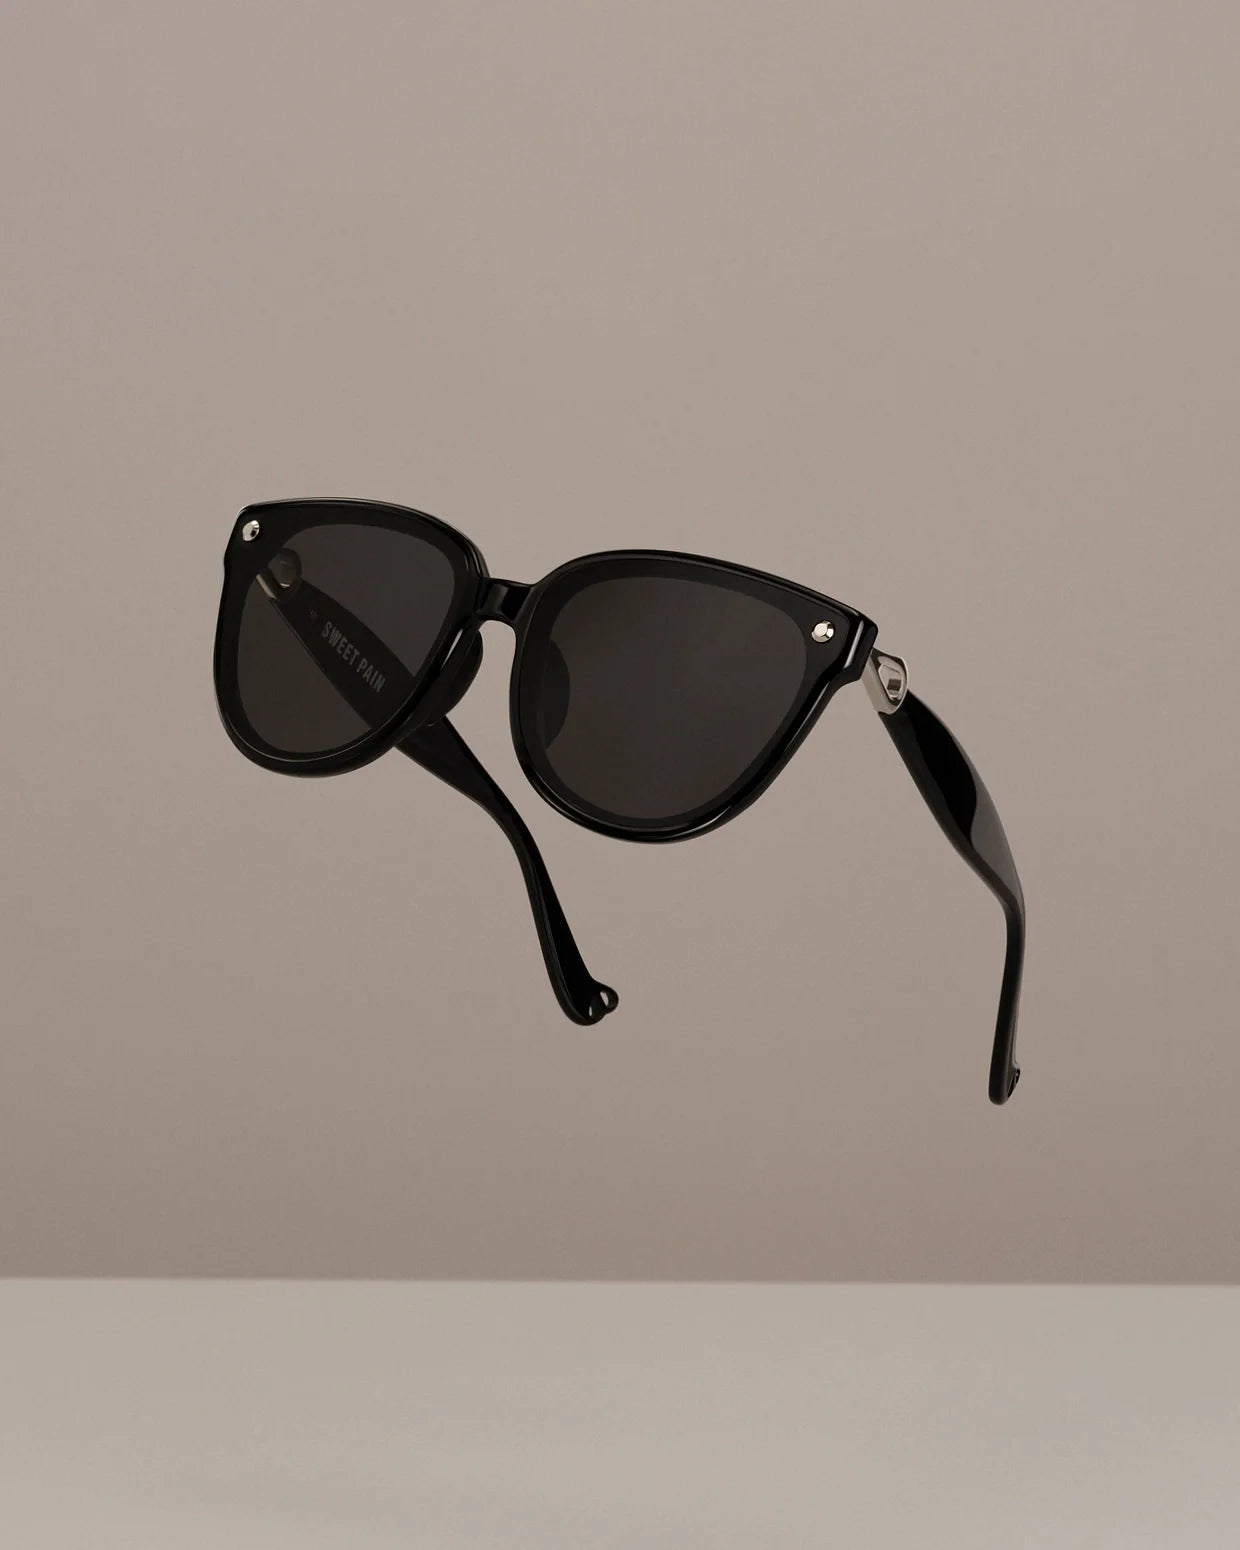 Nana G1 Sunglasses – Subtle Cat-Eye Silhouette